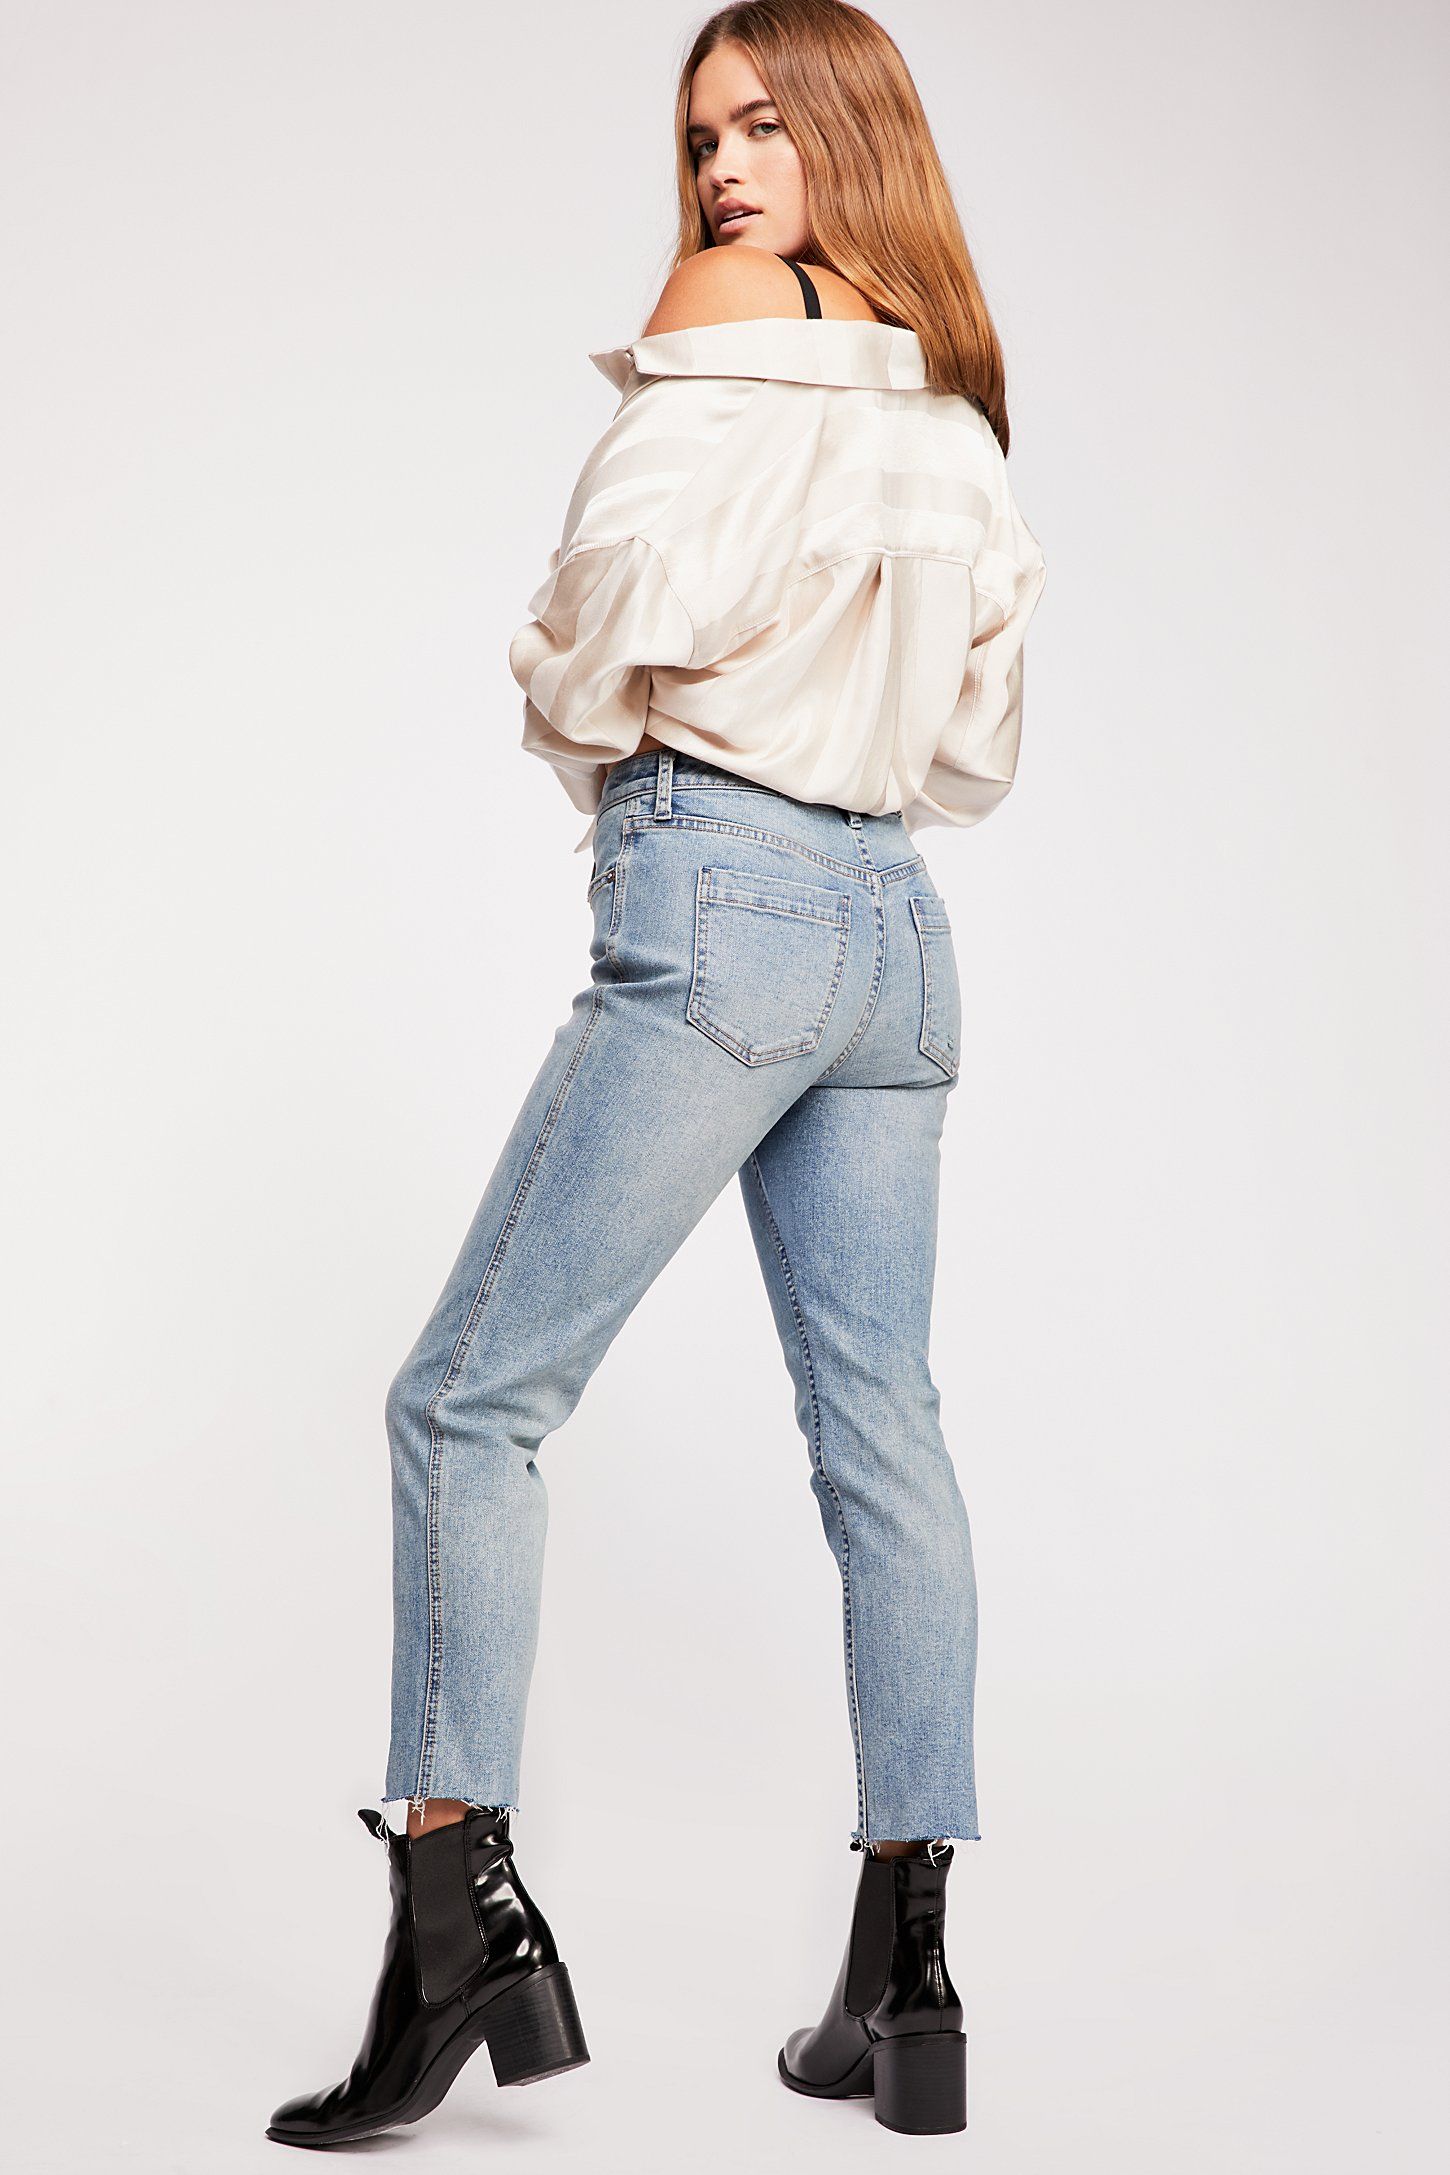 10 Best Jeans for Curvy Women – Best Plus Size Denim Brands